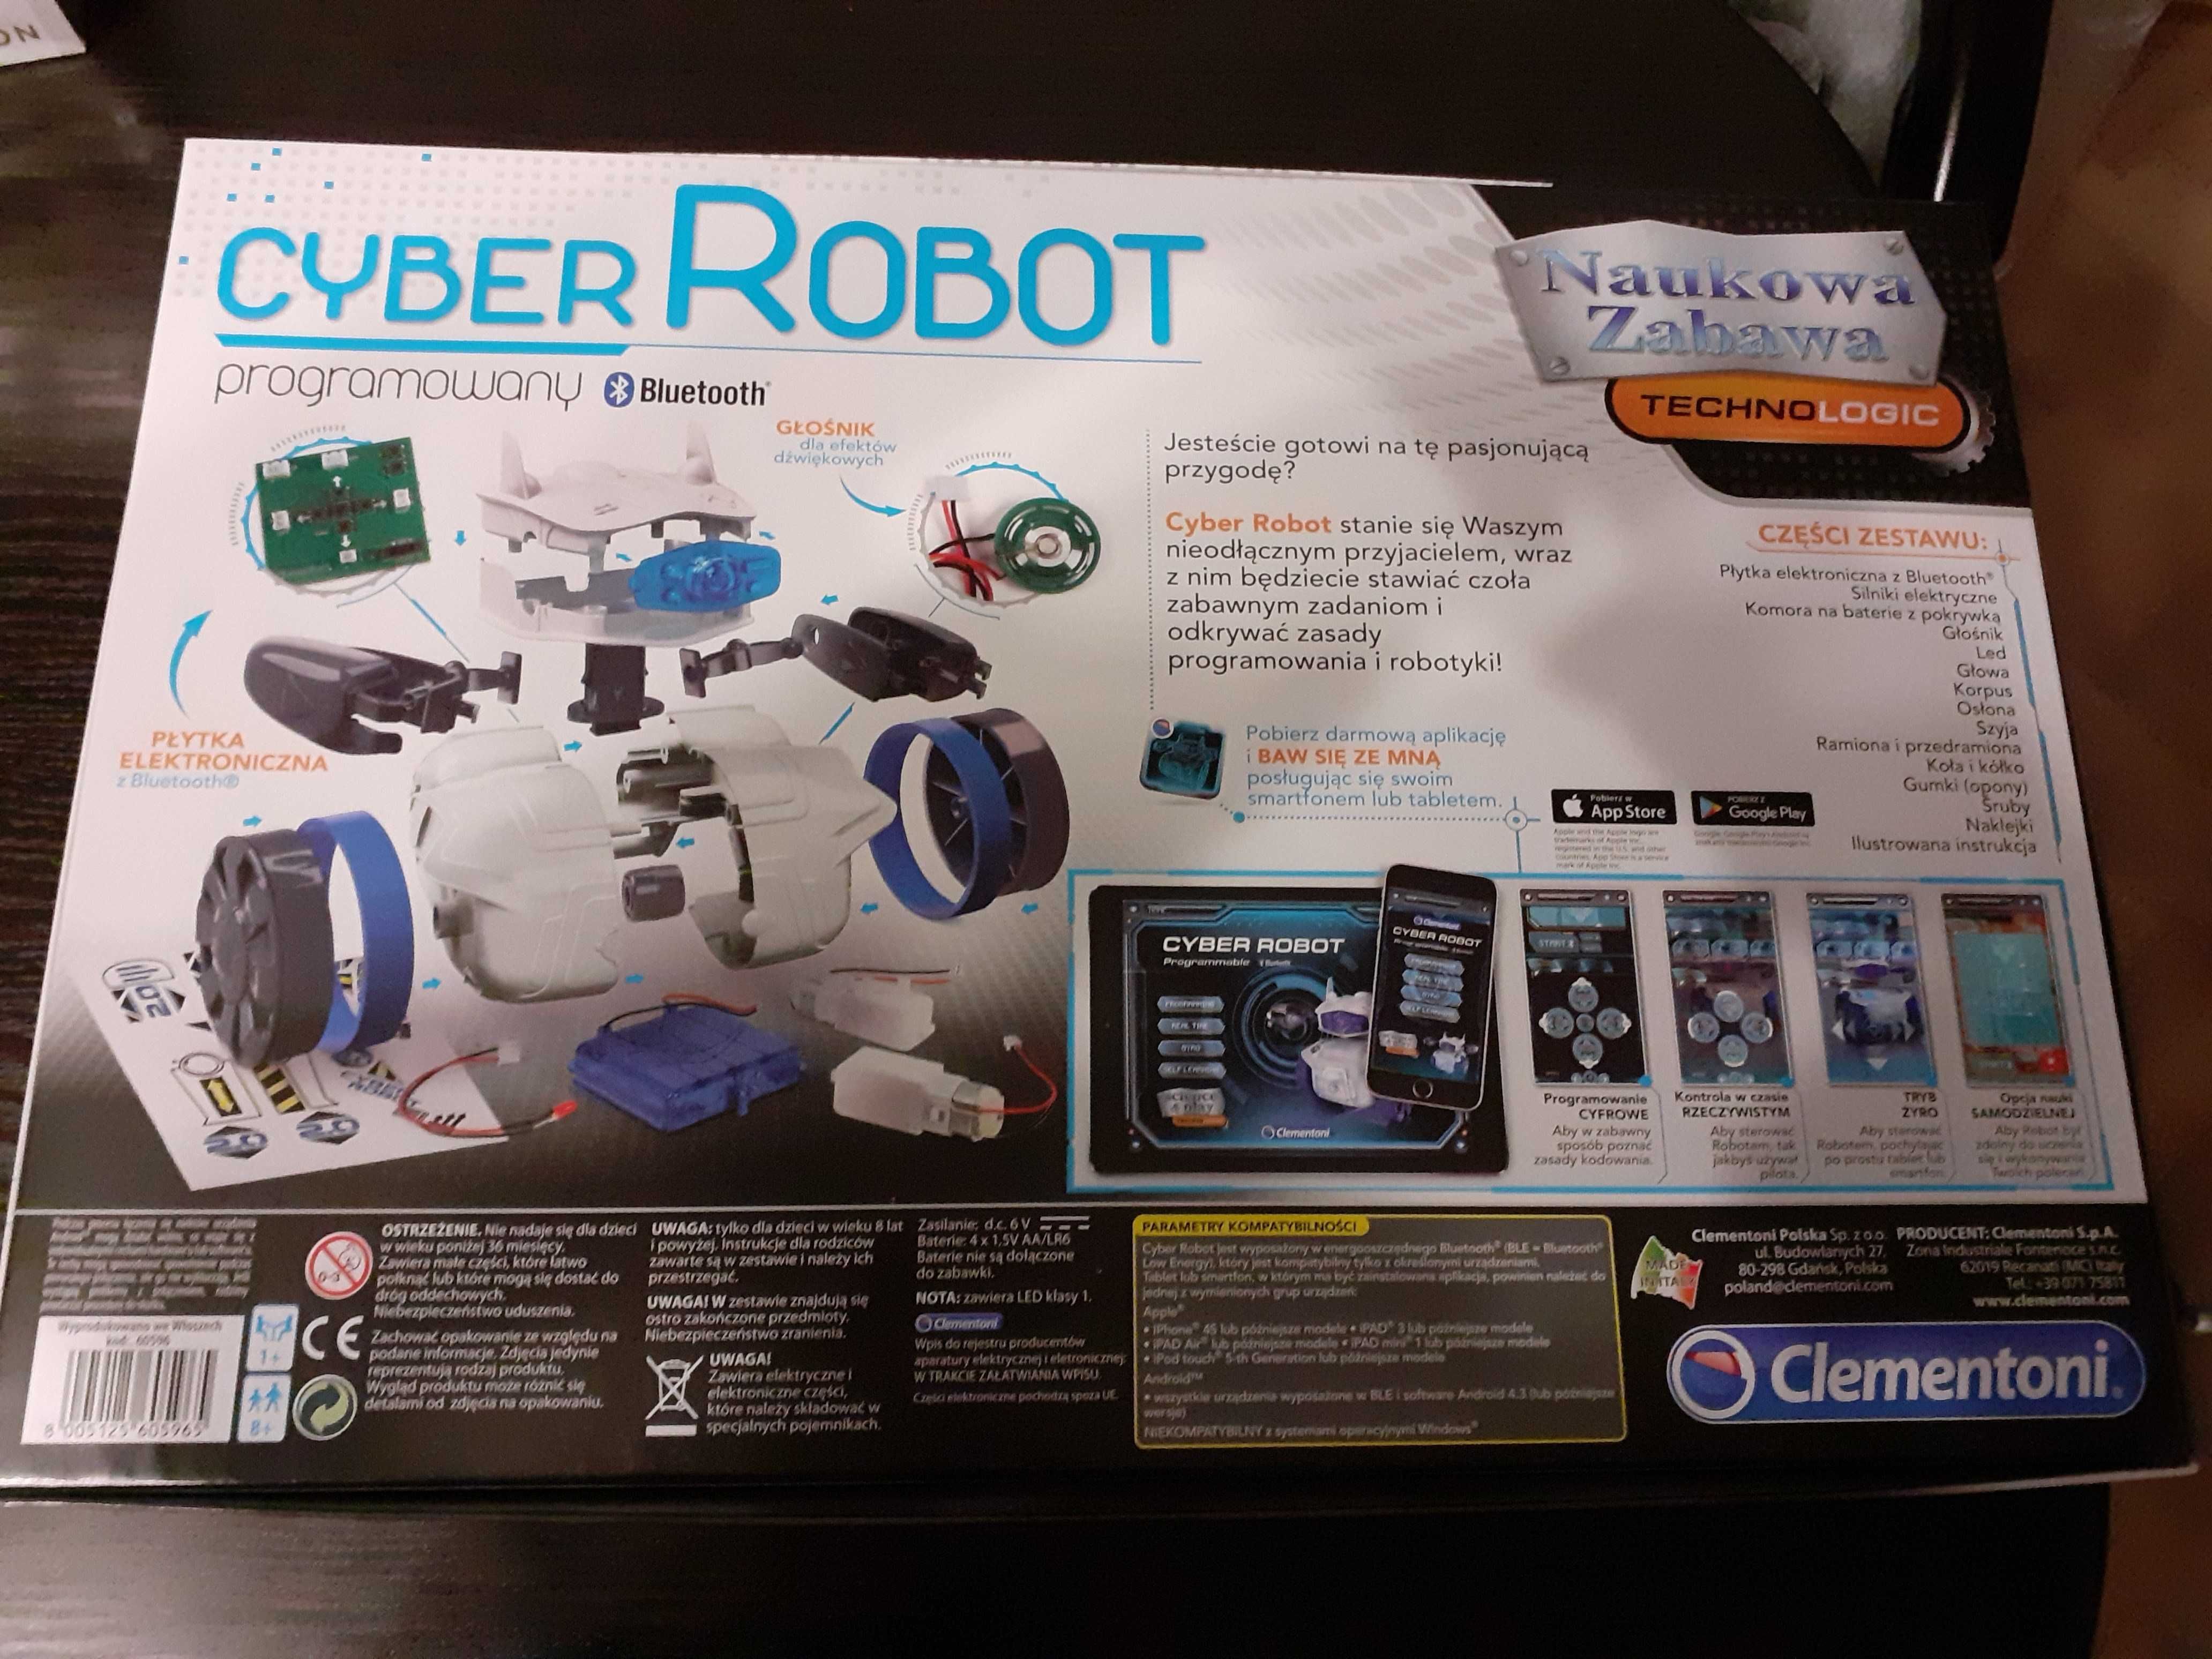 Cyber Robot programowany